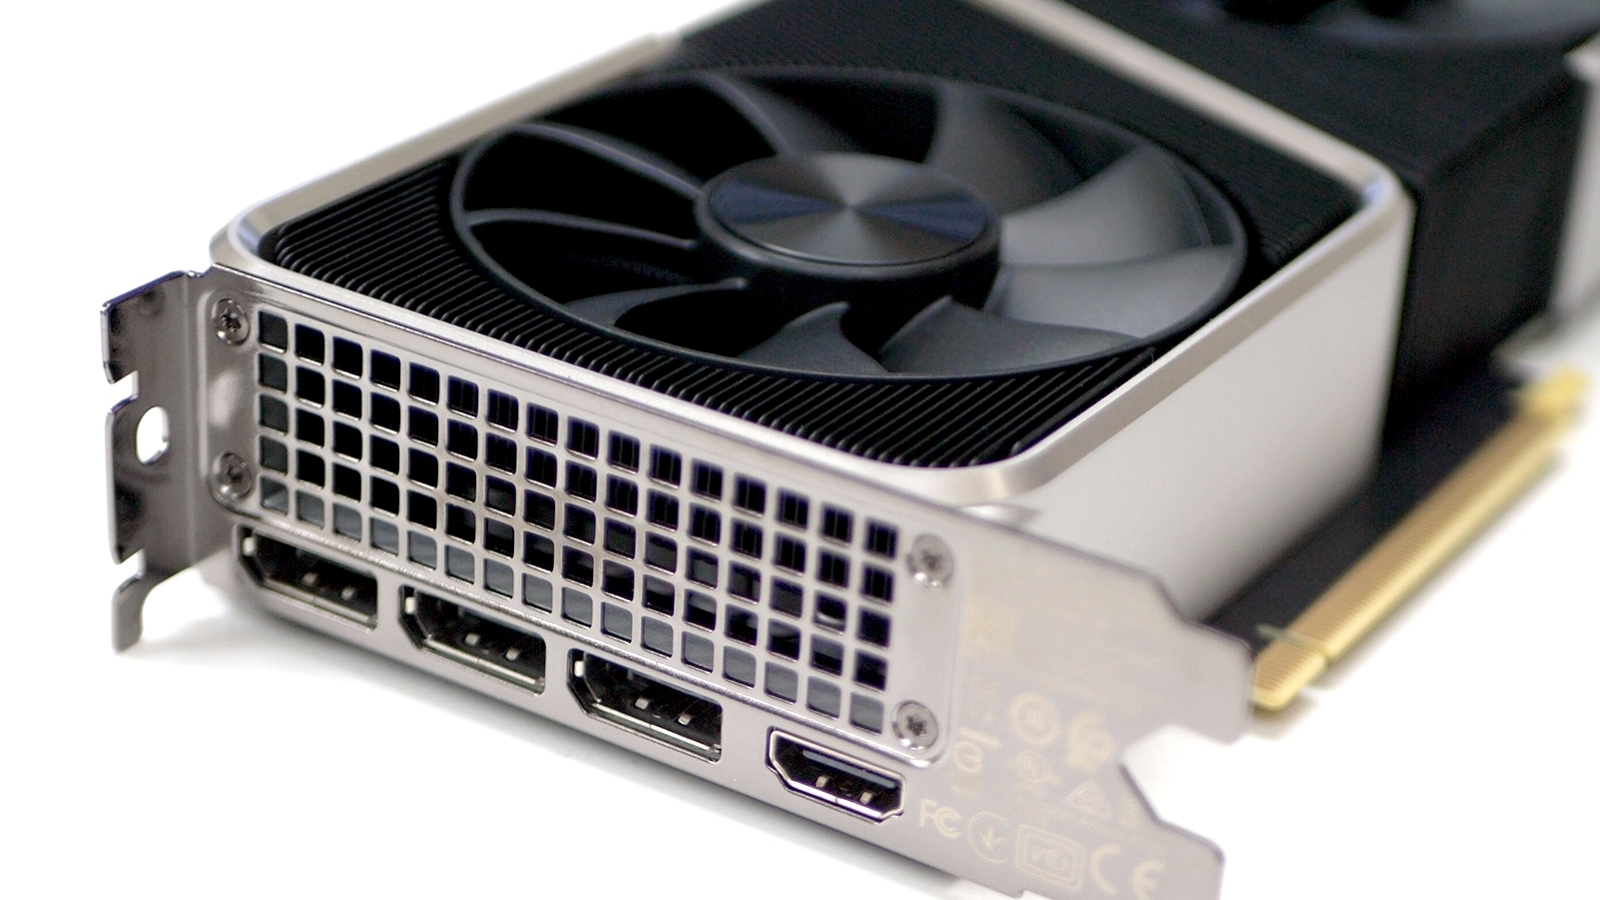 NVIDIA GeForce RTX 3060 Ti GPU - Benchmarks and Specs